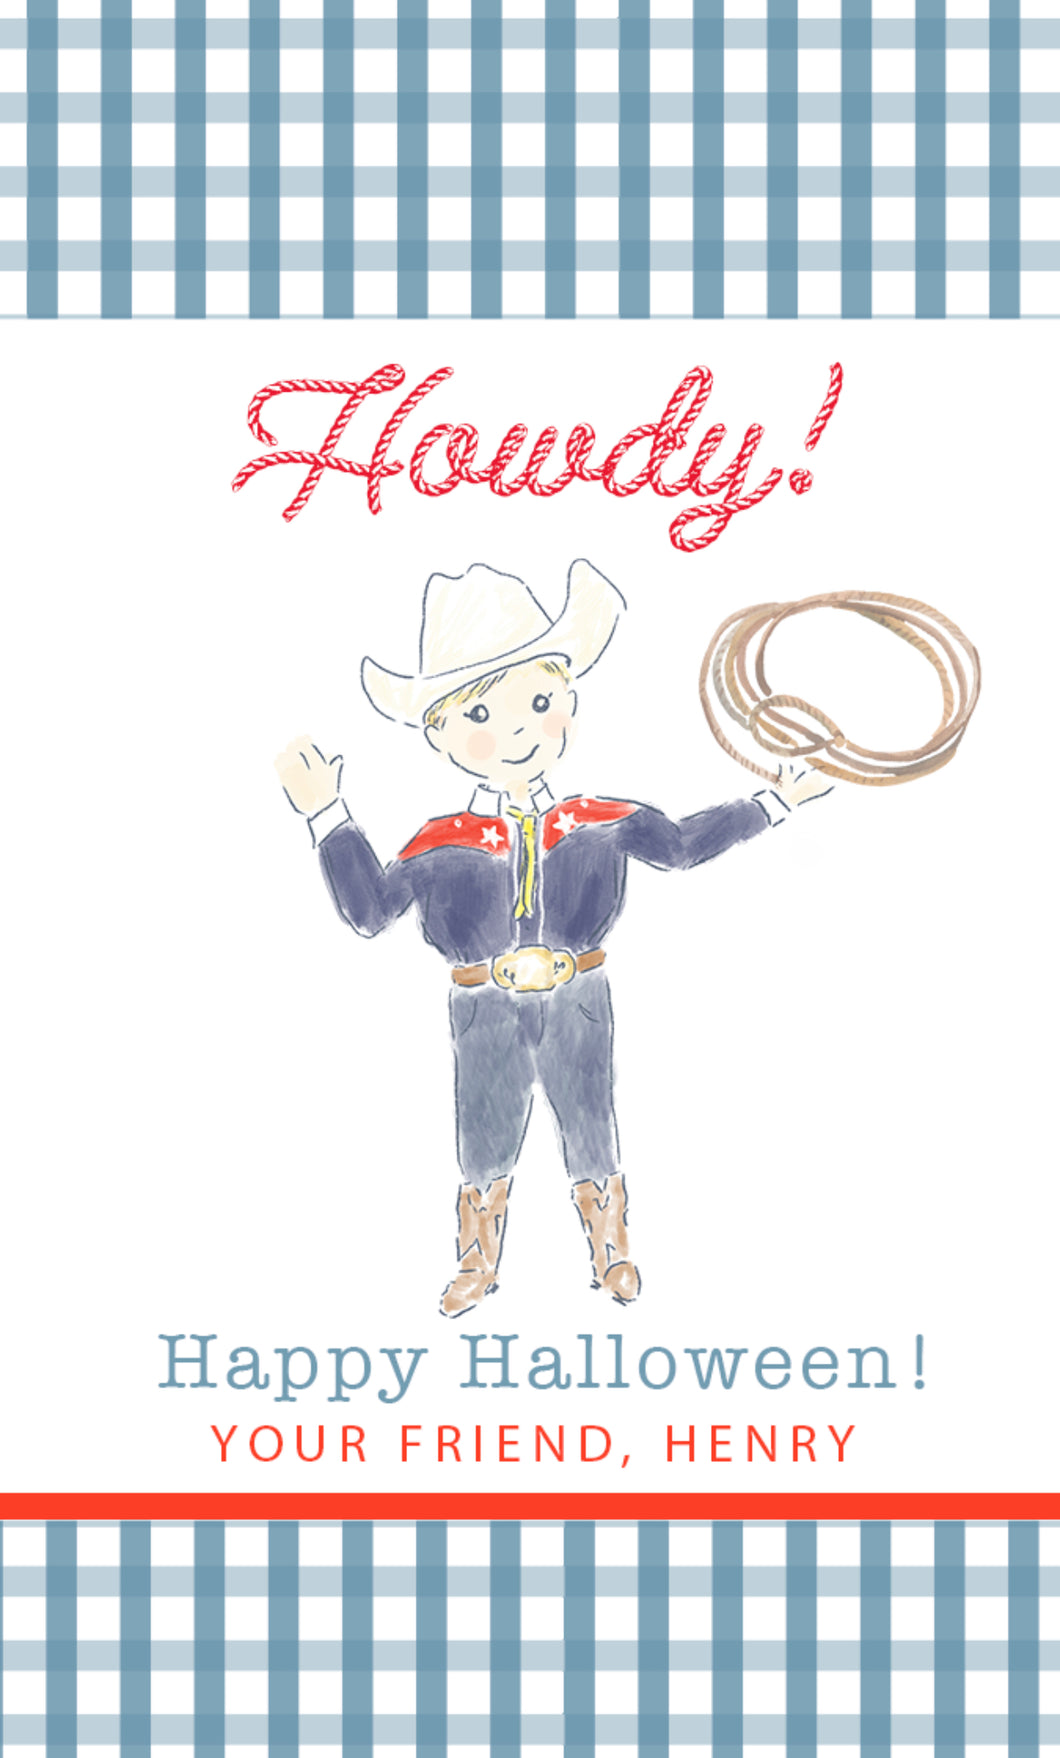 Howdy Halloween